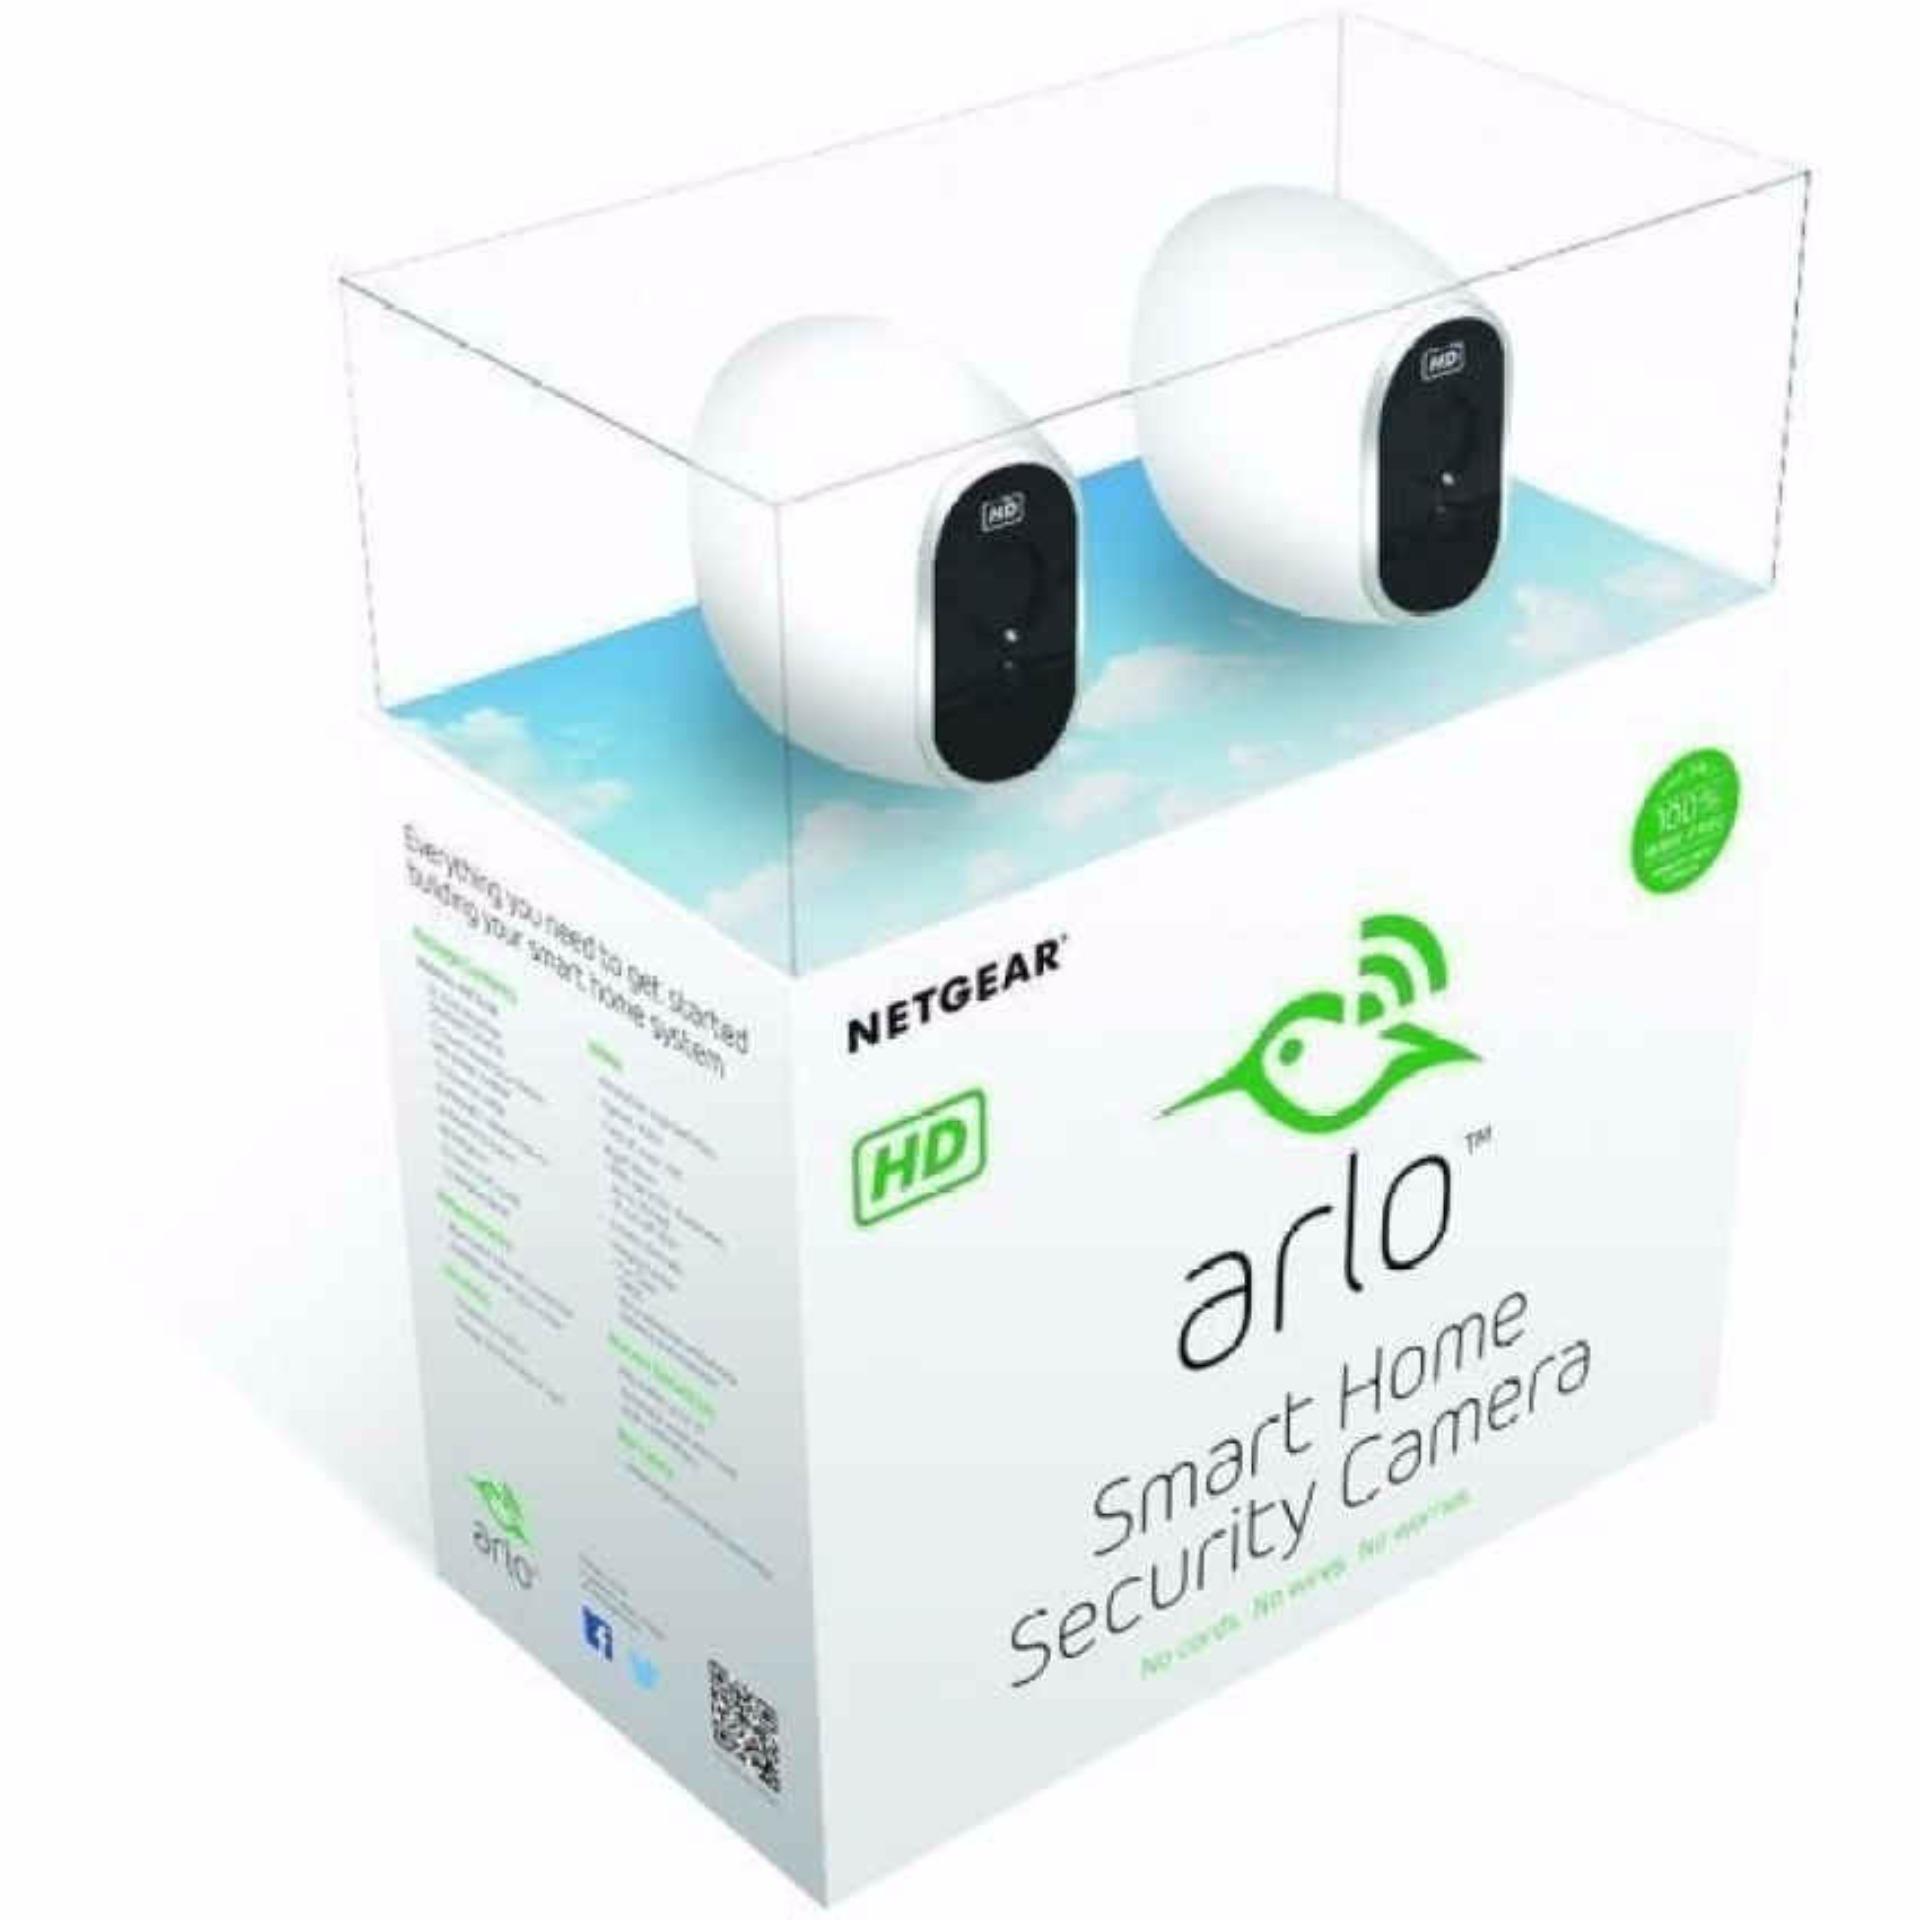 Netgear Arlo VMS3230 HD 2 Camera Smart Home Security System